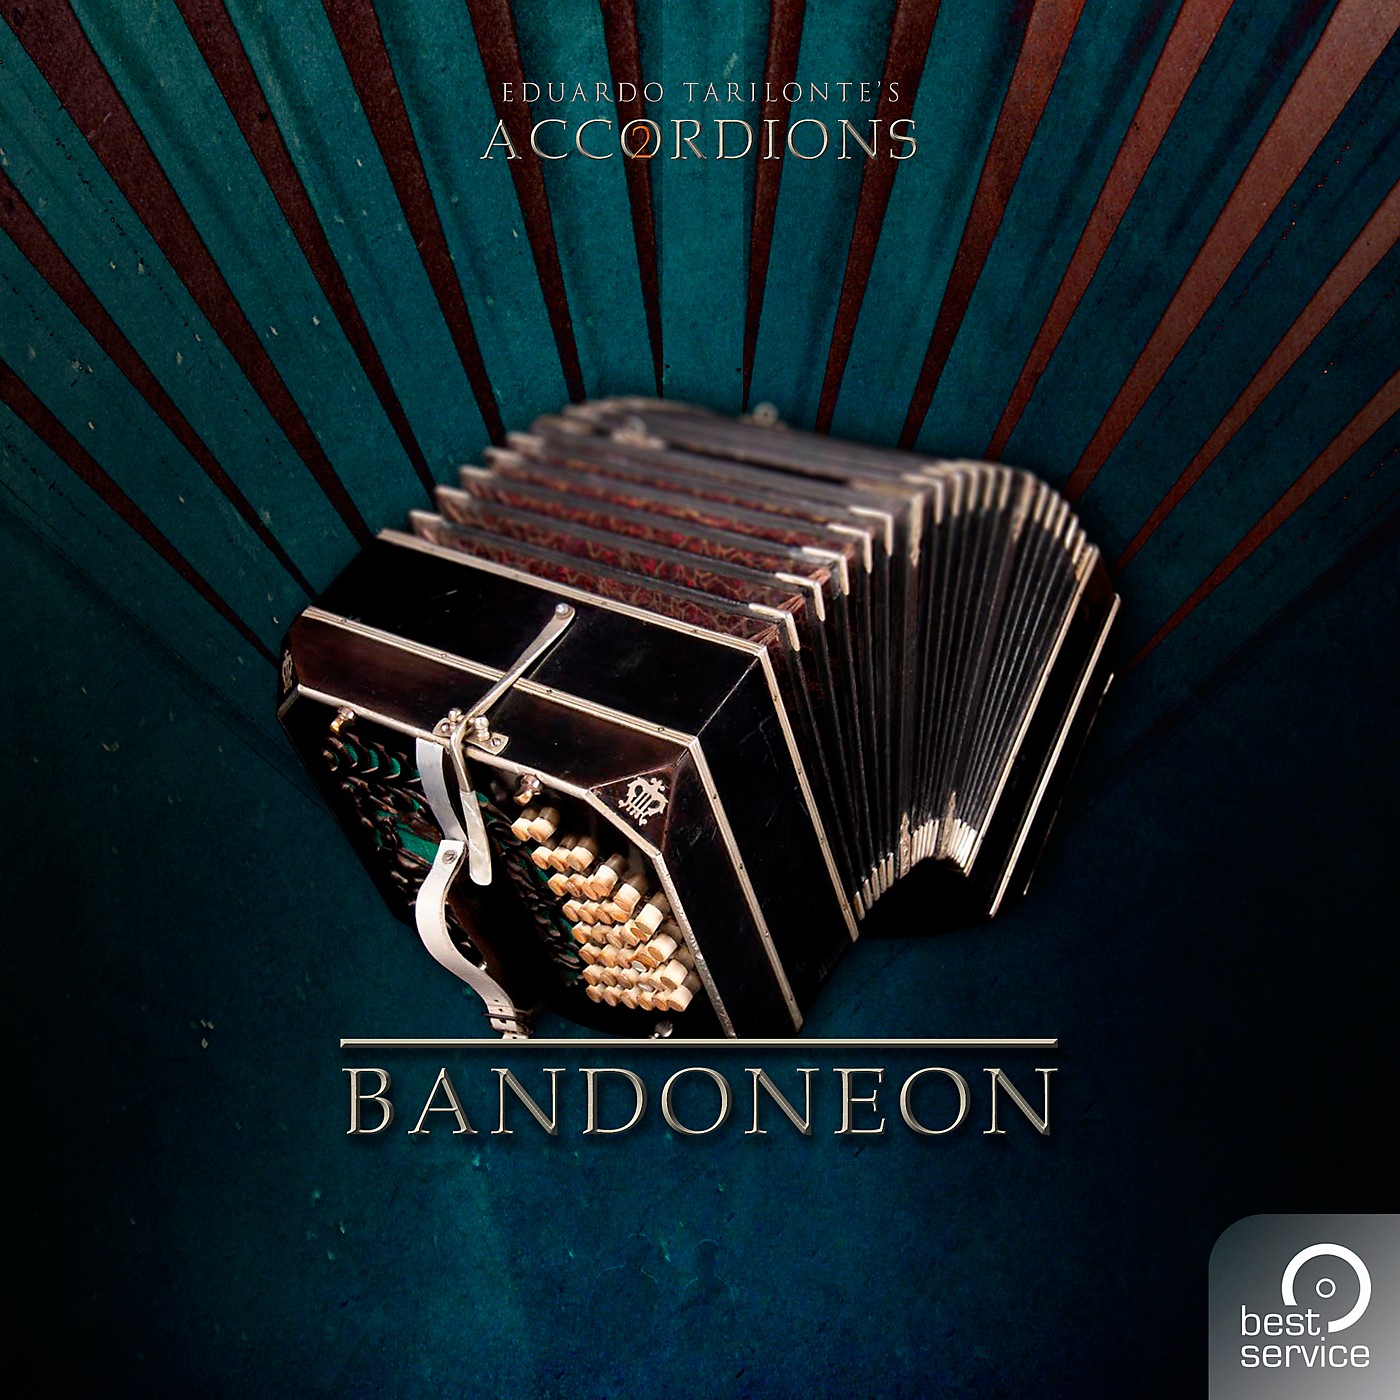 Best Service Accordions 2 - Single Bandoneon thumbnail